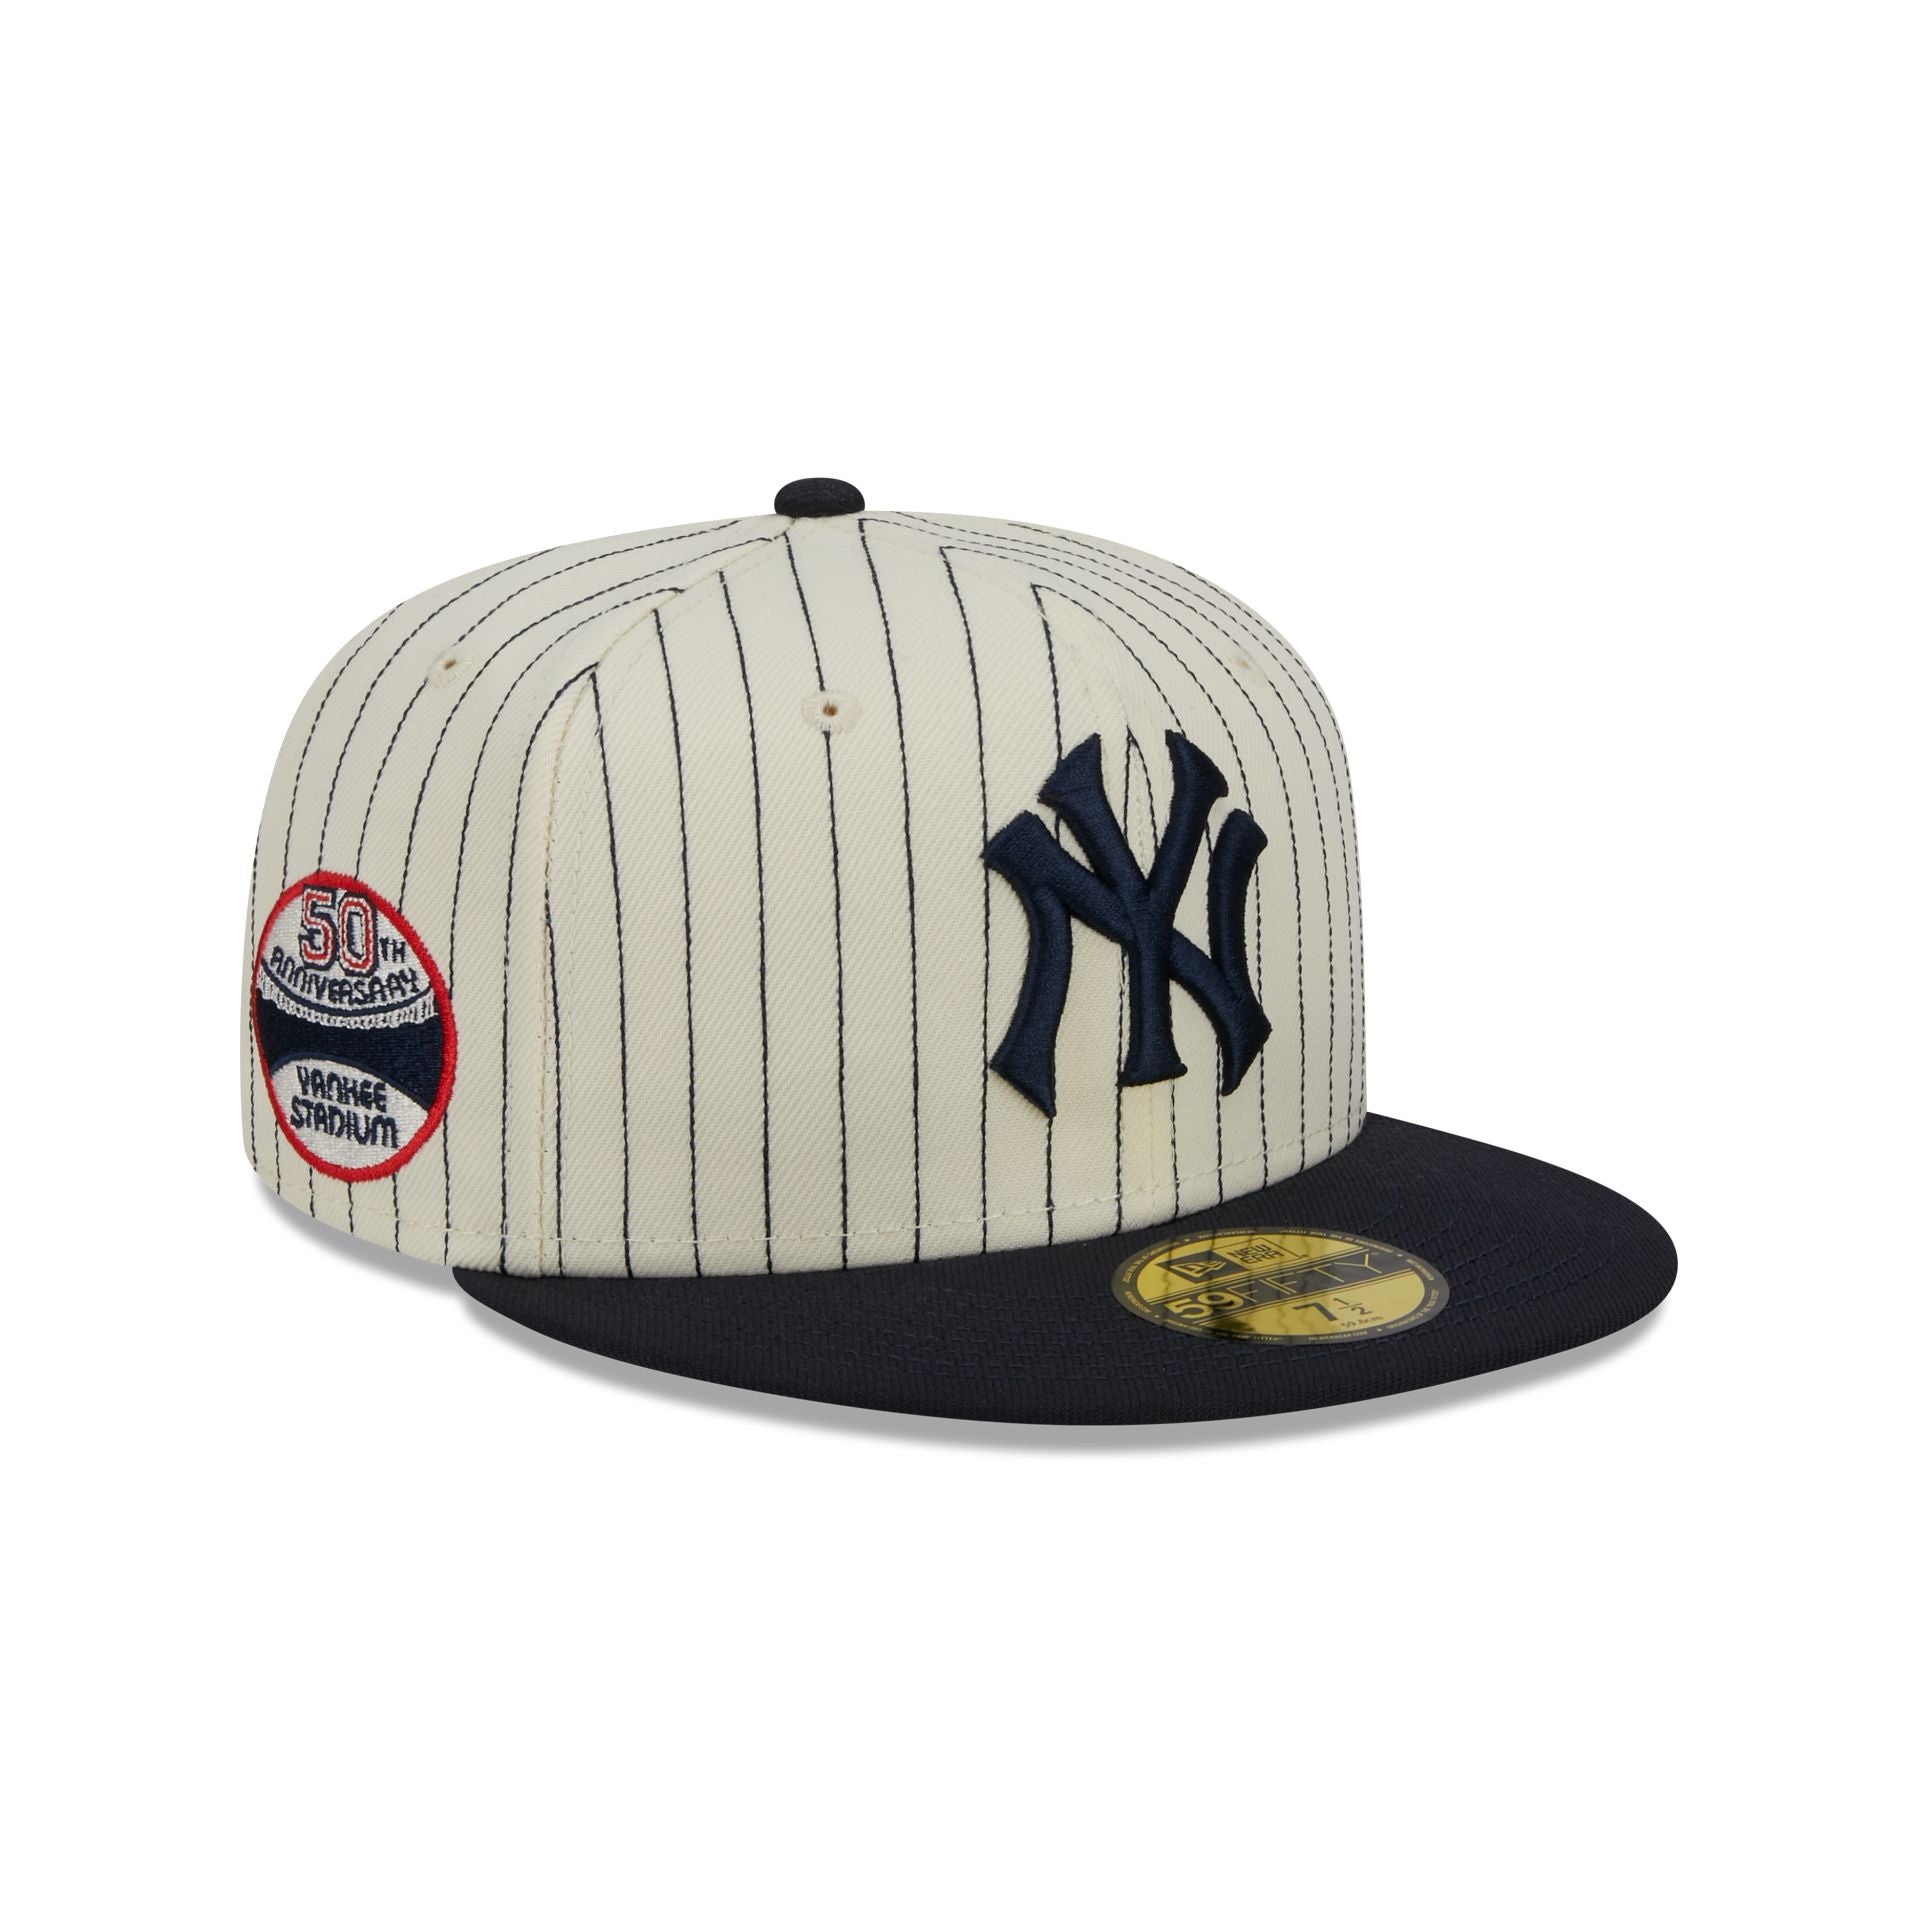 New York Yankees Throwback Jerseys, Yankees Retro & Vintage Throwback  Uniforms